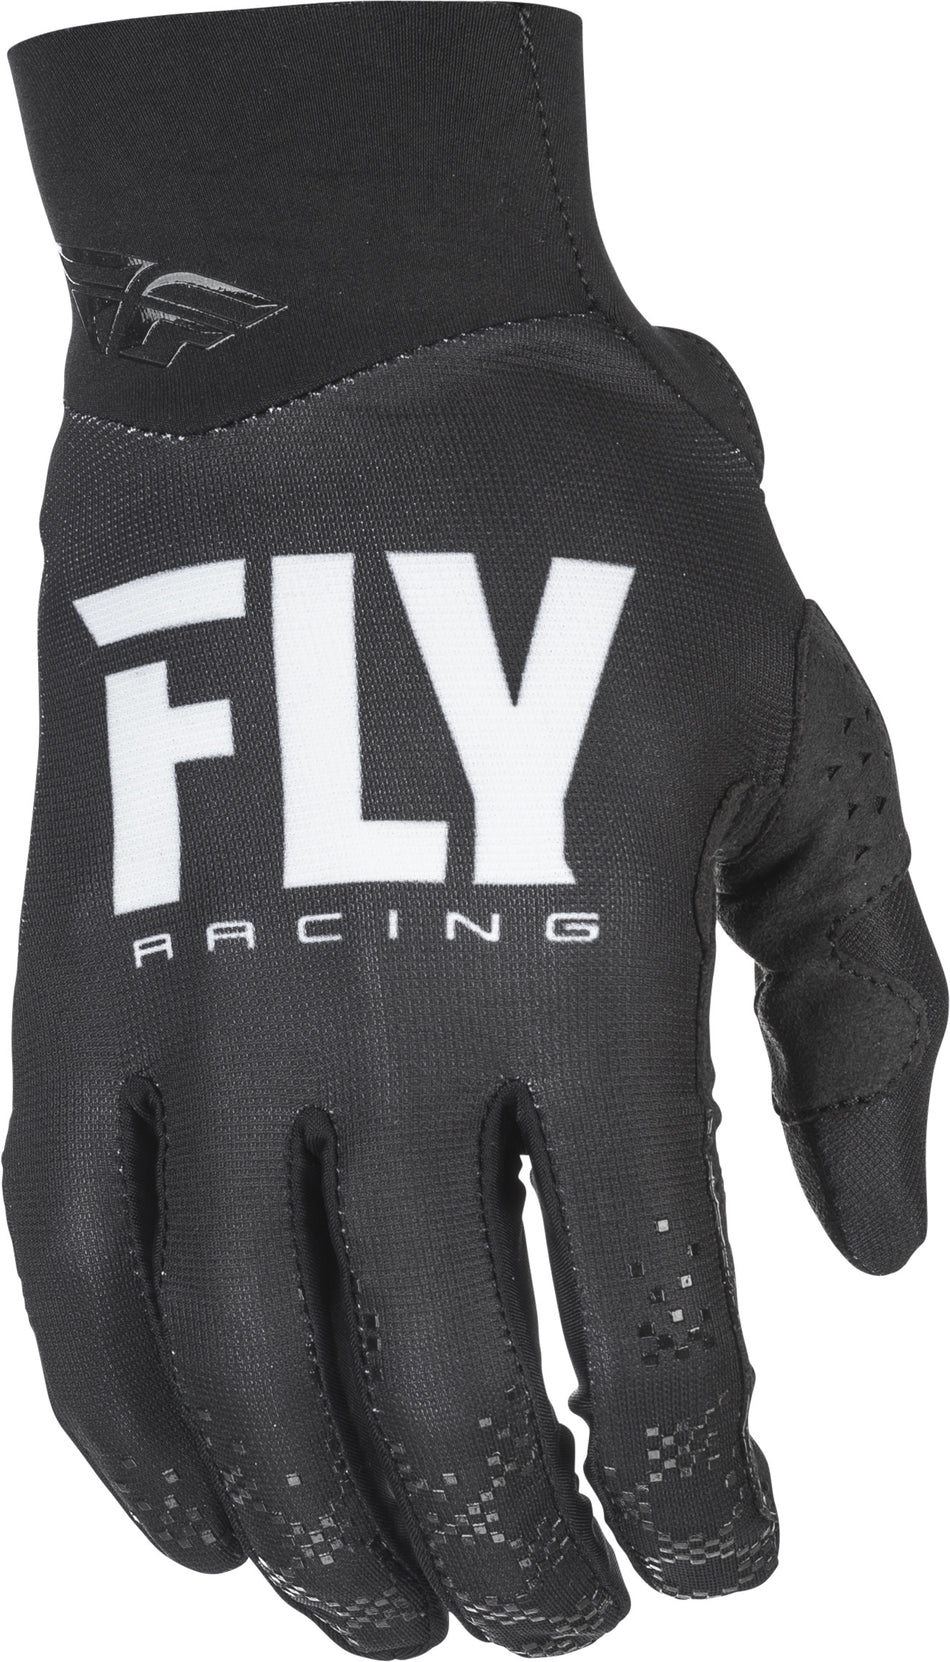 FLY RACING Pro Lite Gloves Black Sz 13 371-81013